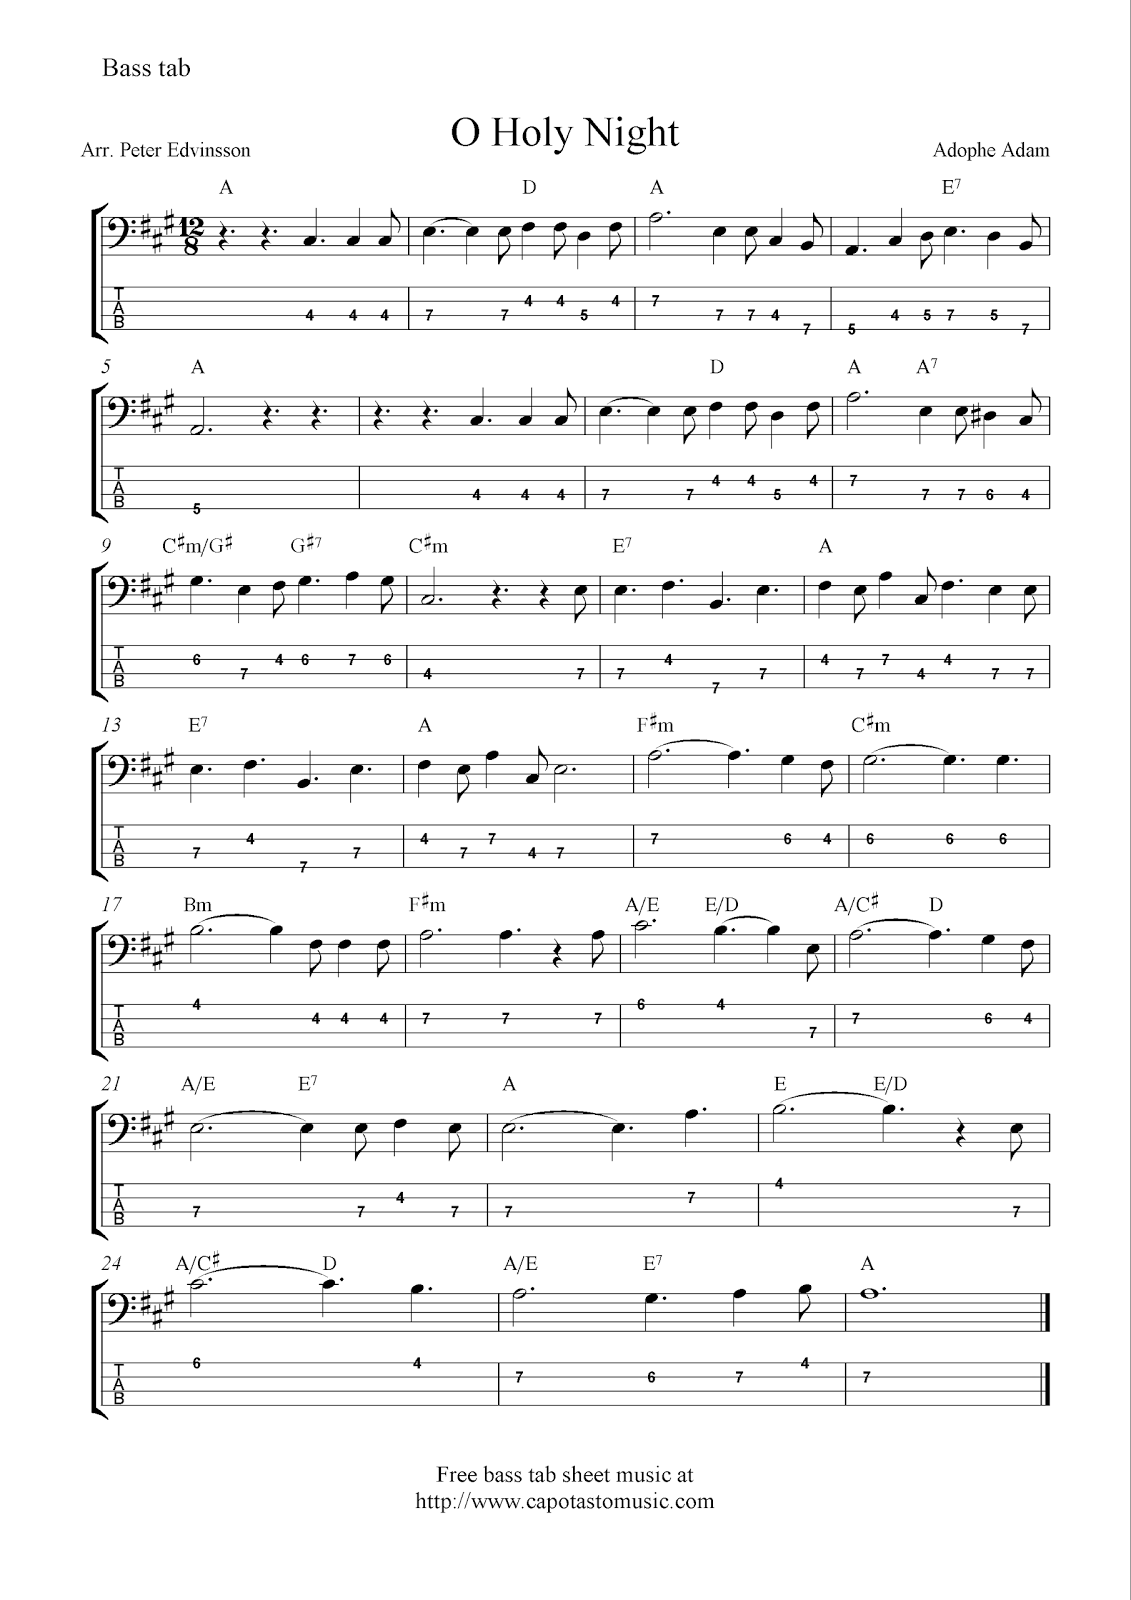 O Holy Night, free Christmas bass tab sheet music notes